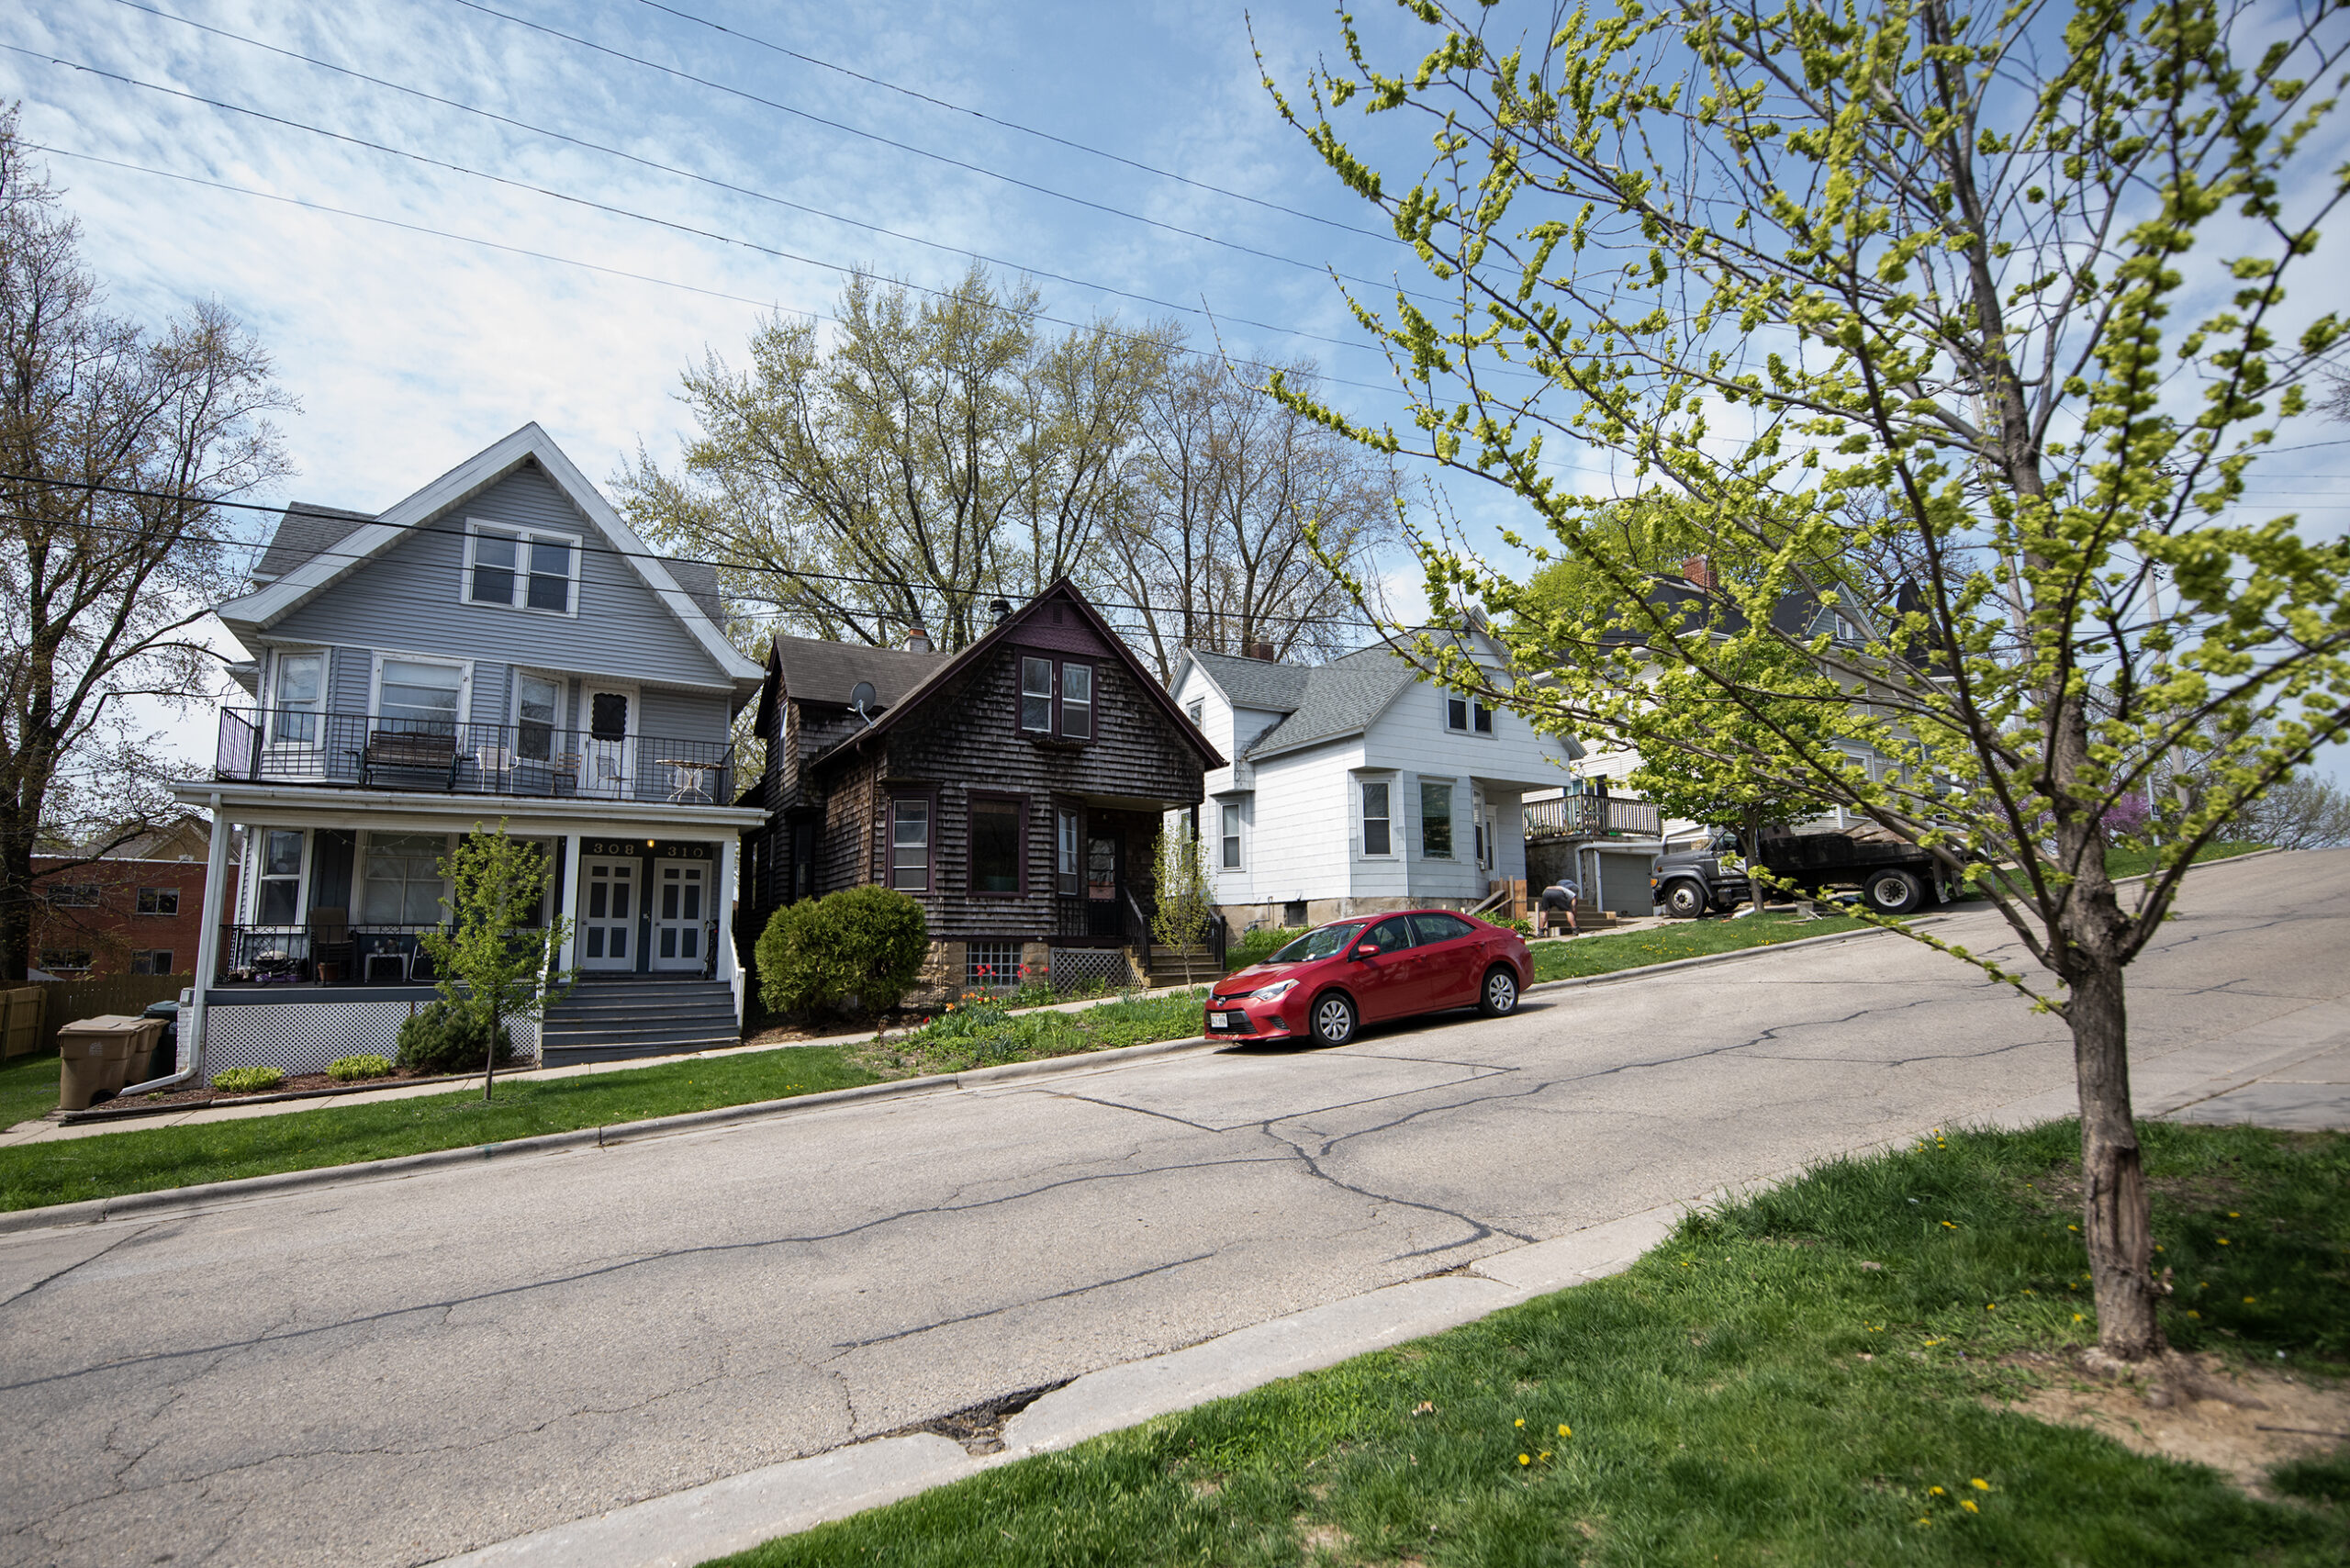 Hot housing market creates property tax fairness concerns among Wisconsin municipalities